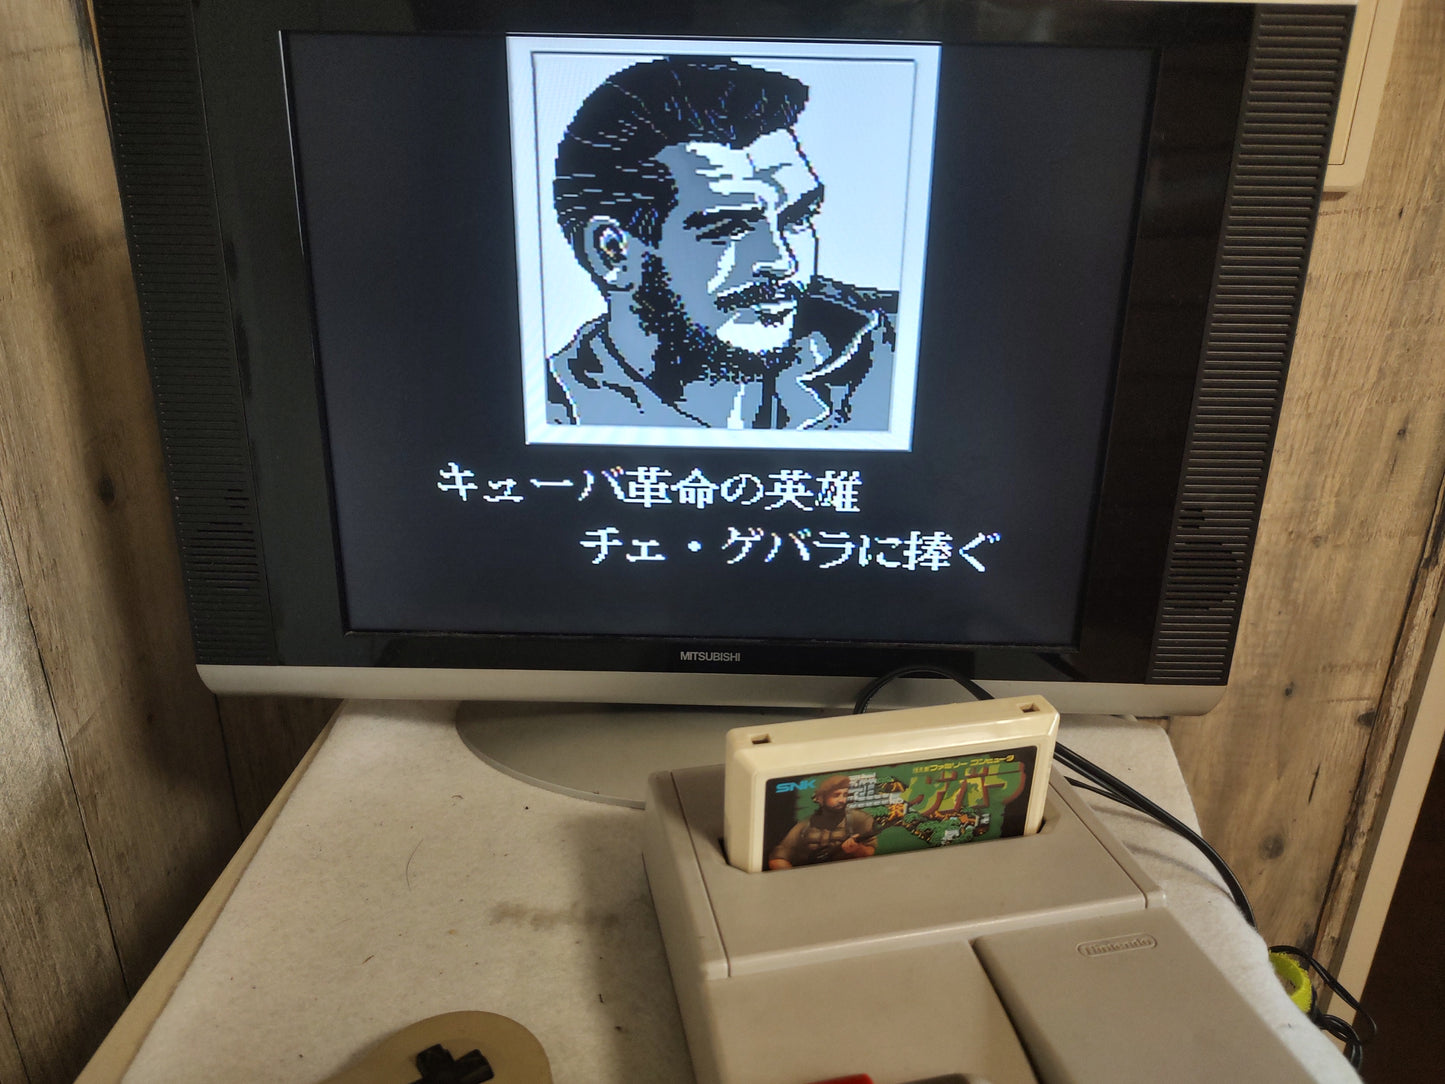 Guevara Guerrilla War game cartridge set, Famicom, FC, NES, Working-f0504-